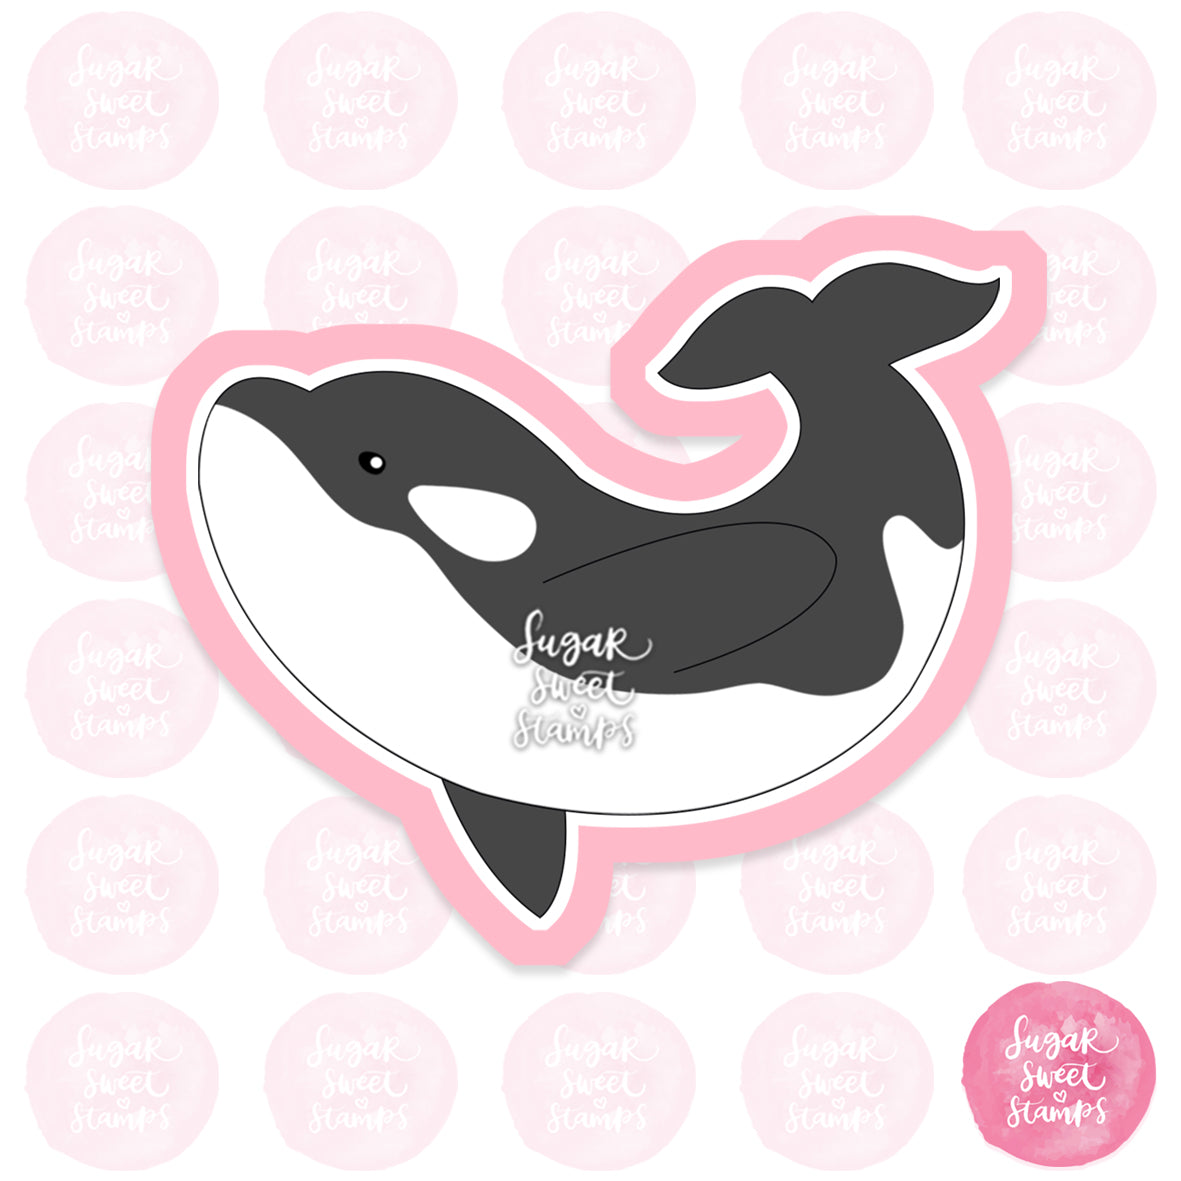 orca killer whale seal sea ocean creature fish custom 3d printed cookie cutter